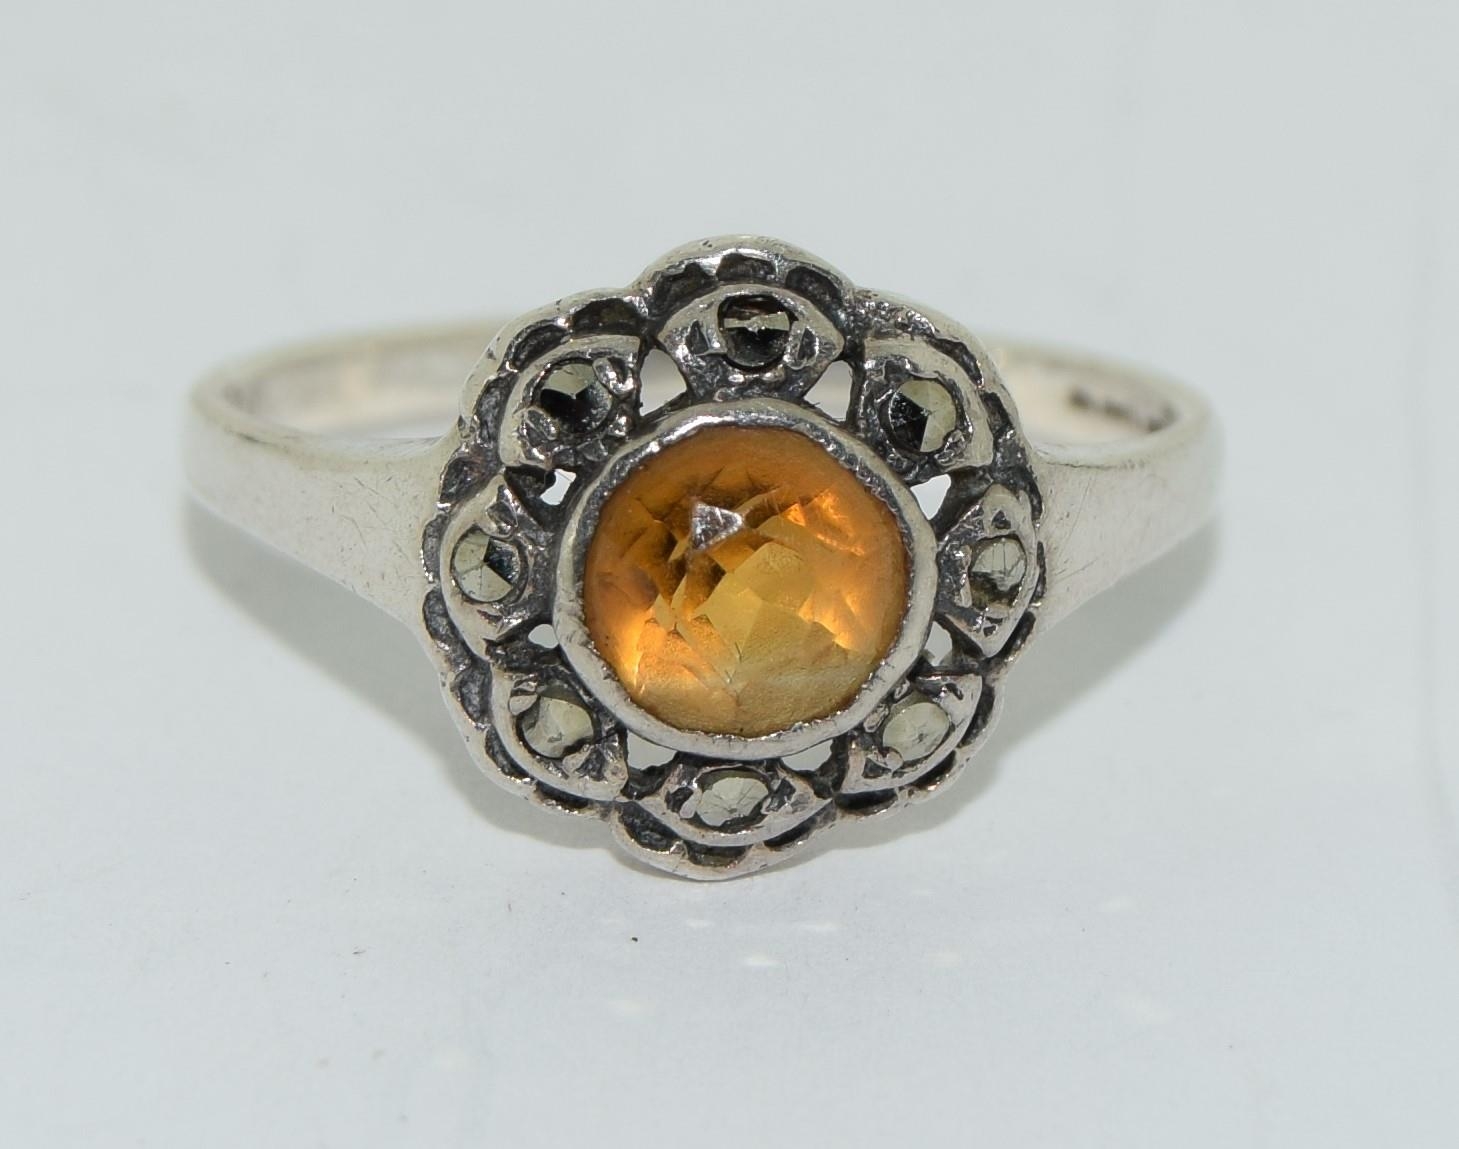 Genuine Art Deco citrine silver marcasite ring, Size N